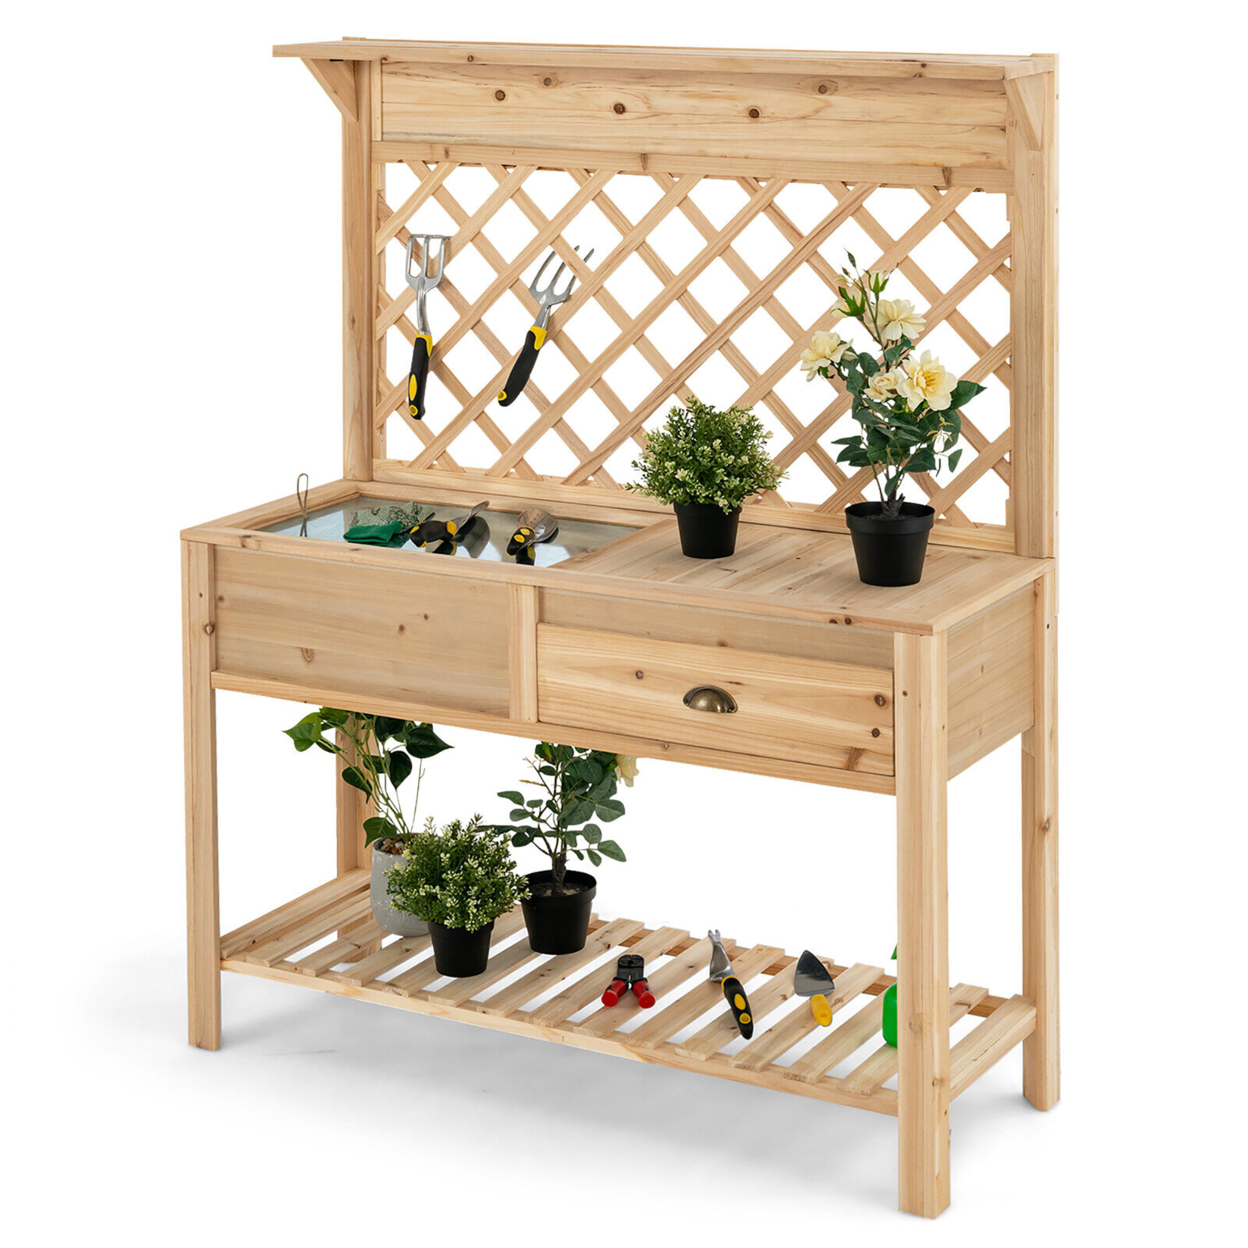 Wood Raised Garden Bed W/ Trellis Elevated Planter Box W/ Storage Shelf And Drawer